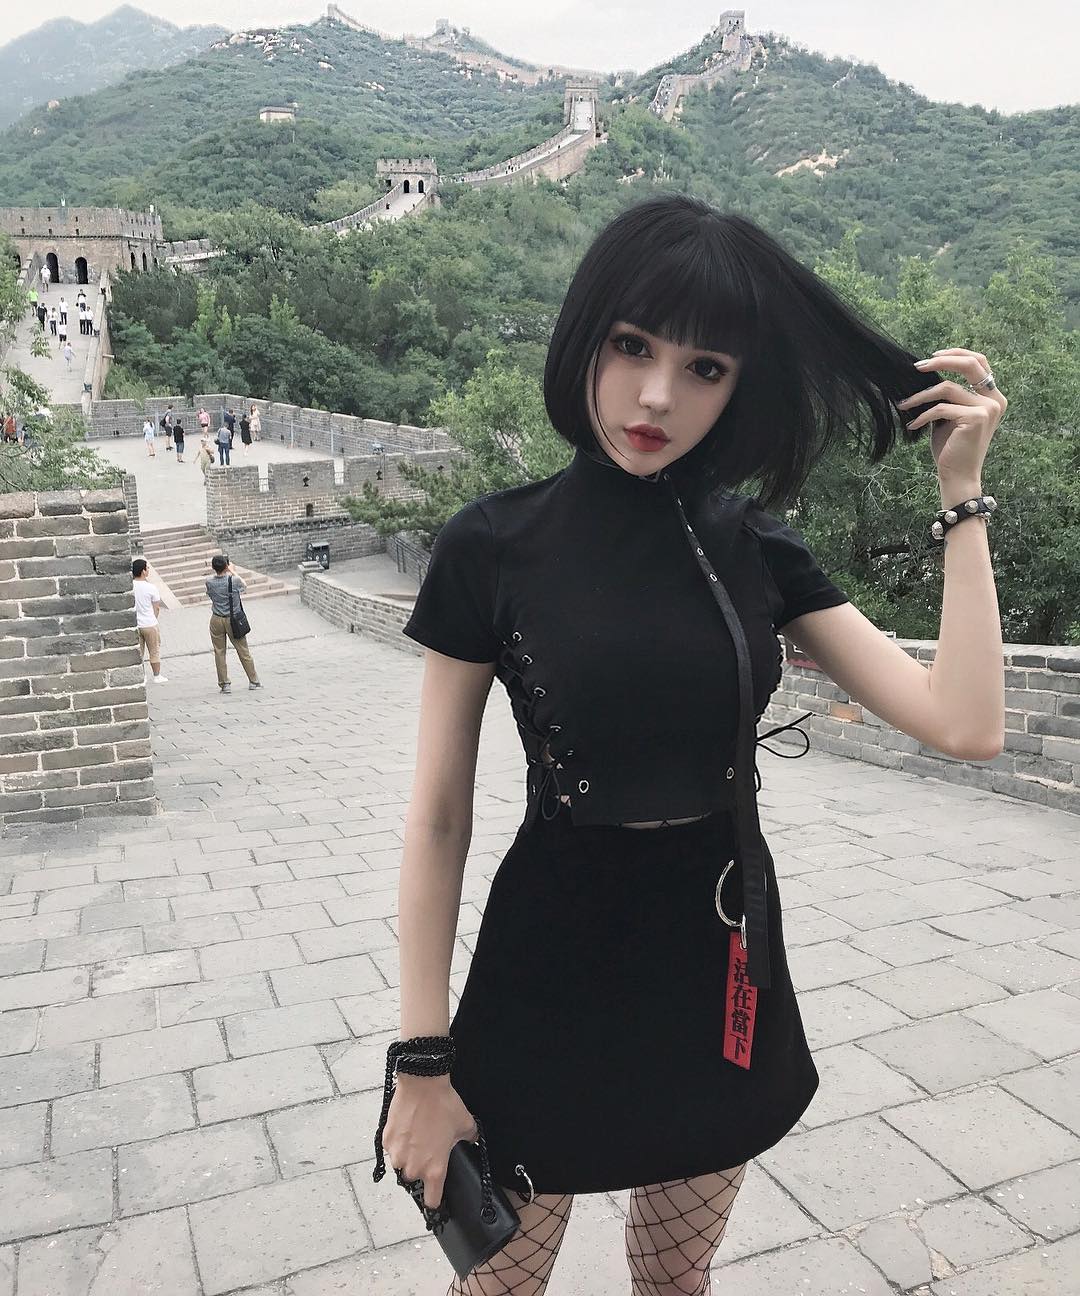 Kina shen has millions of followers on instagram